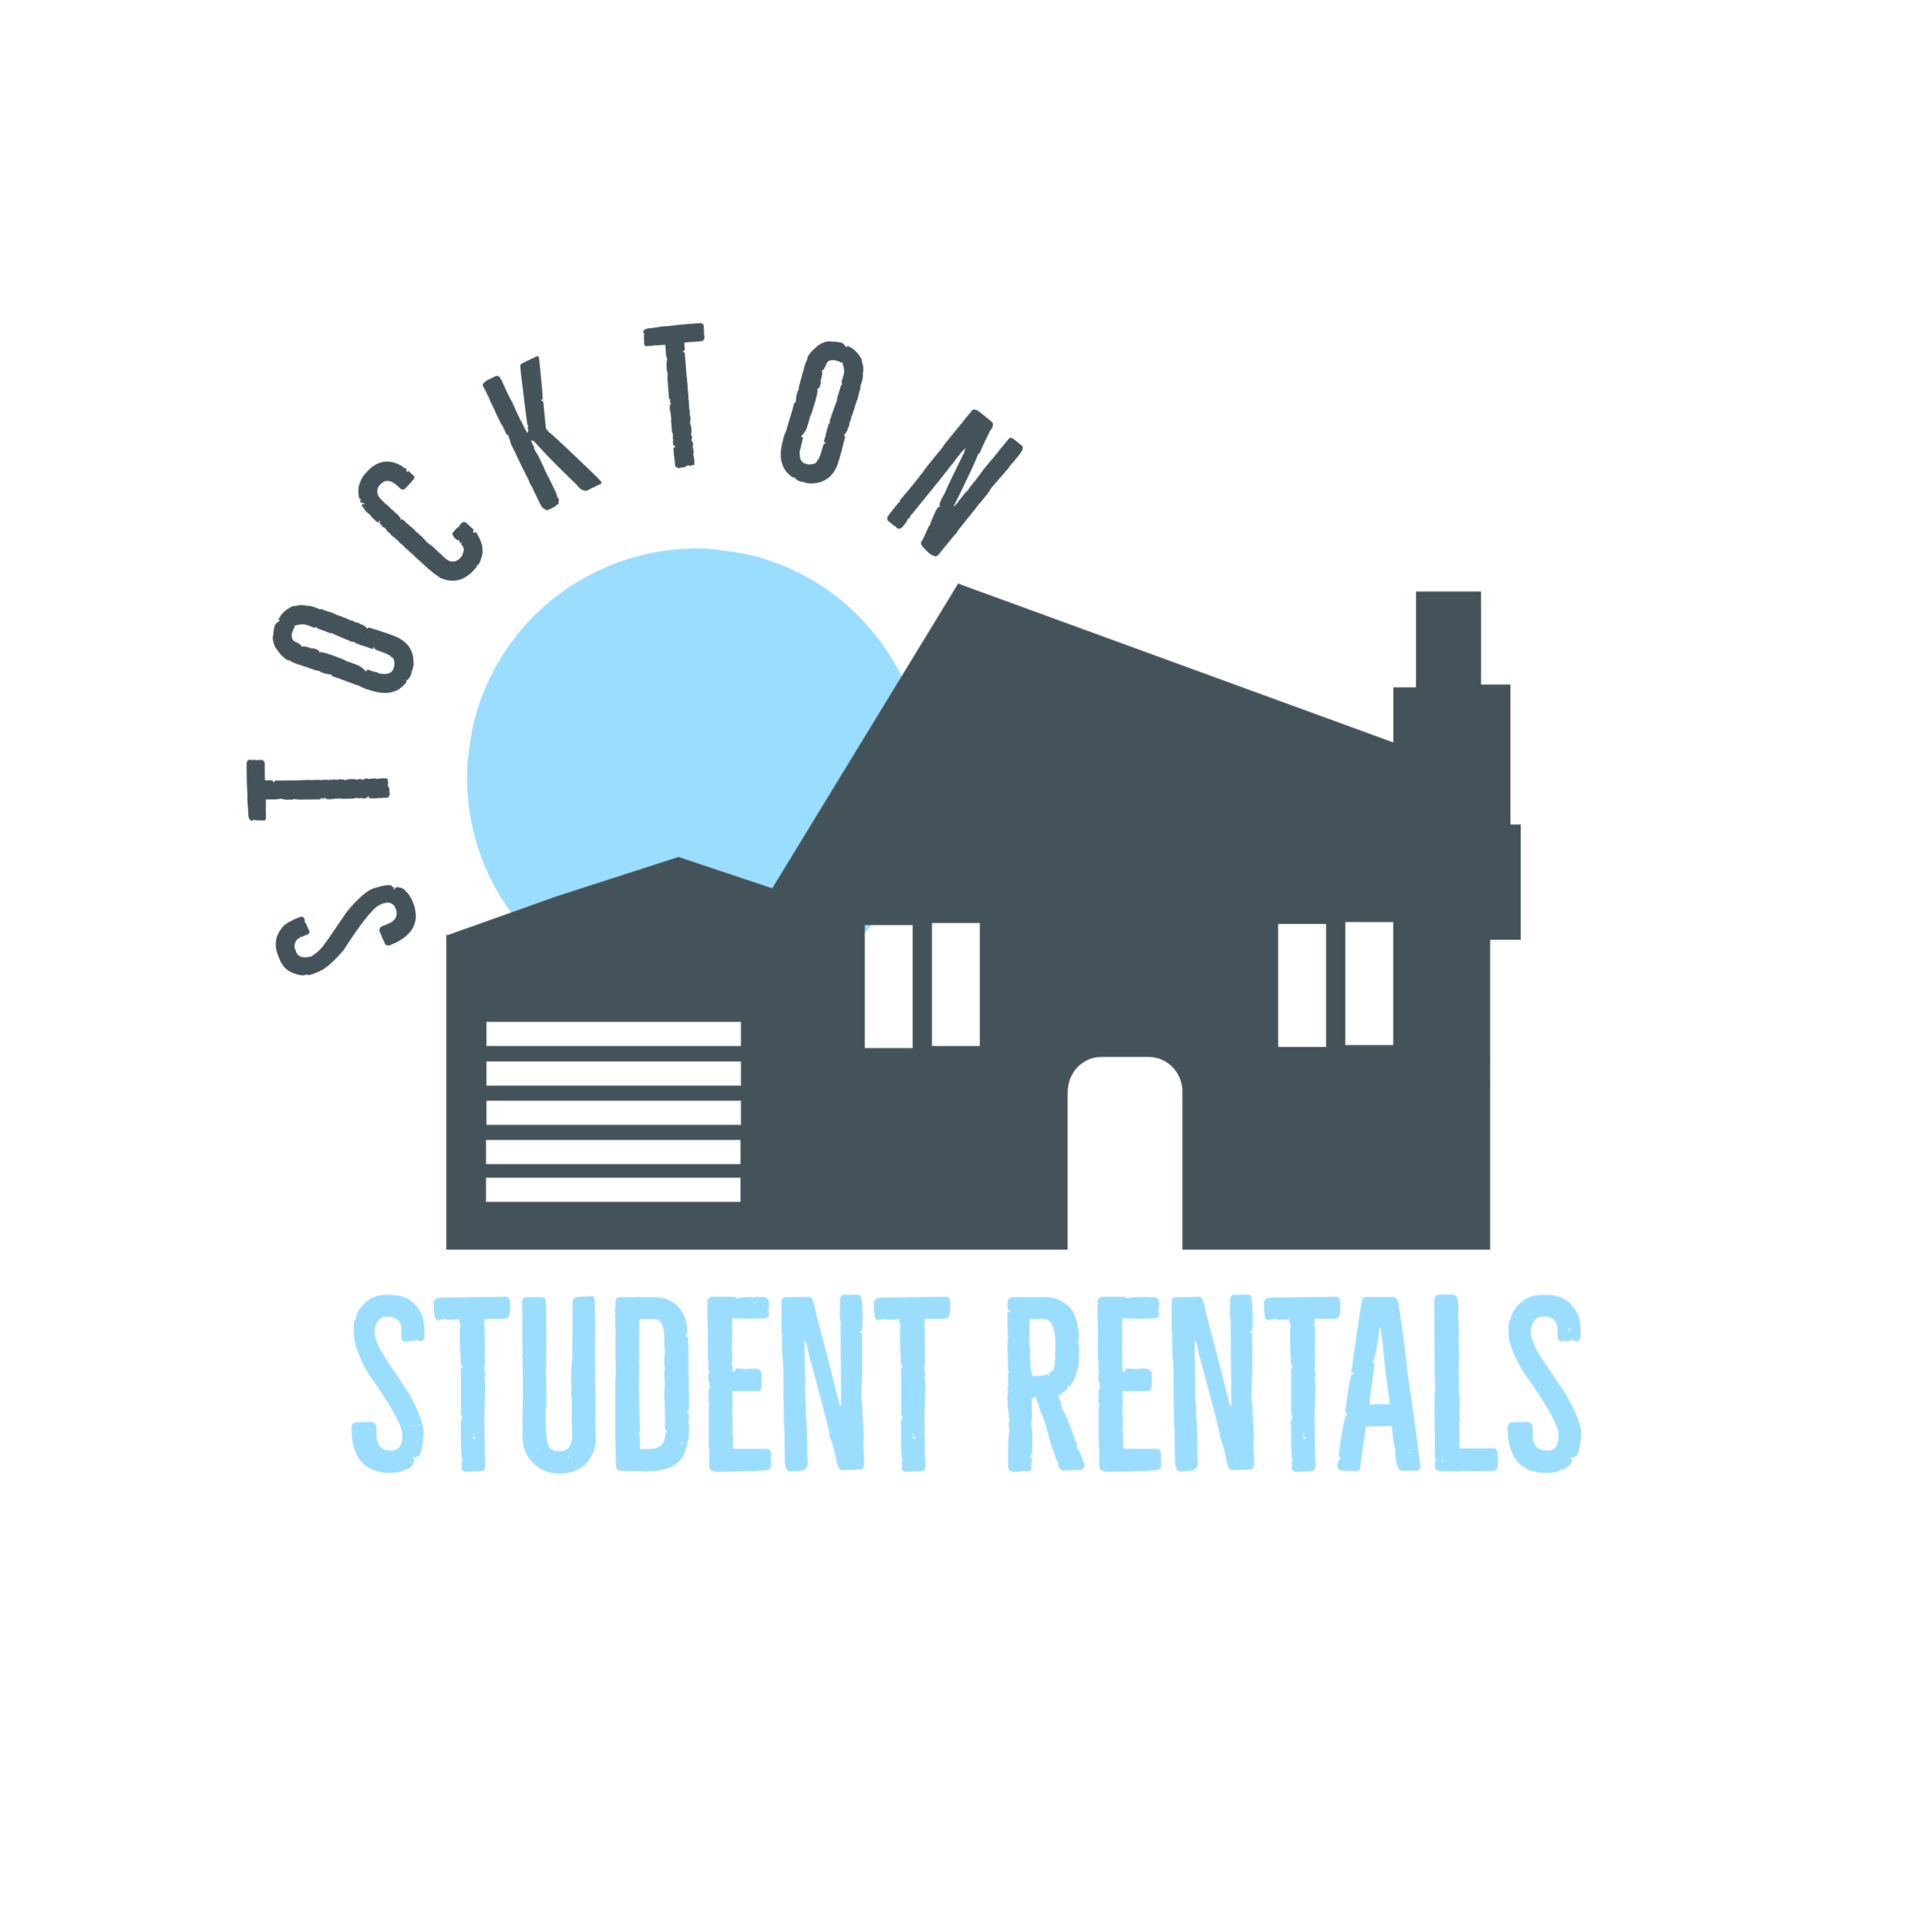 Stockton Student Rentals